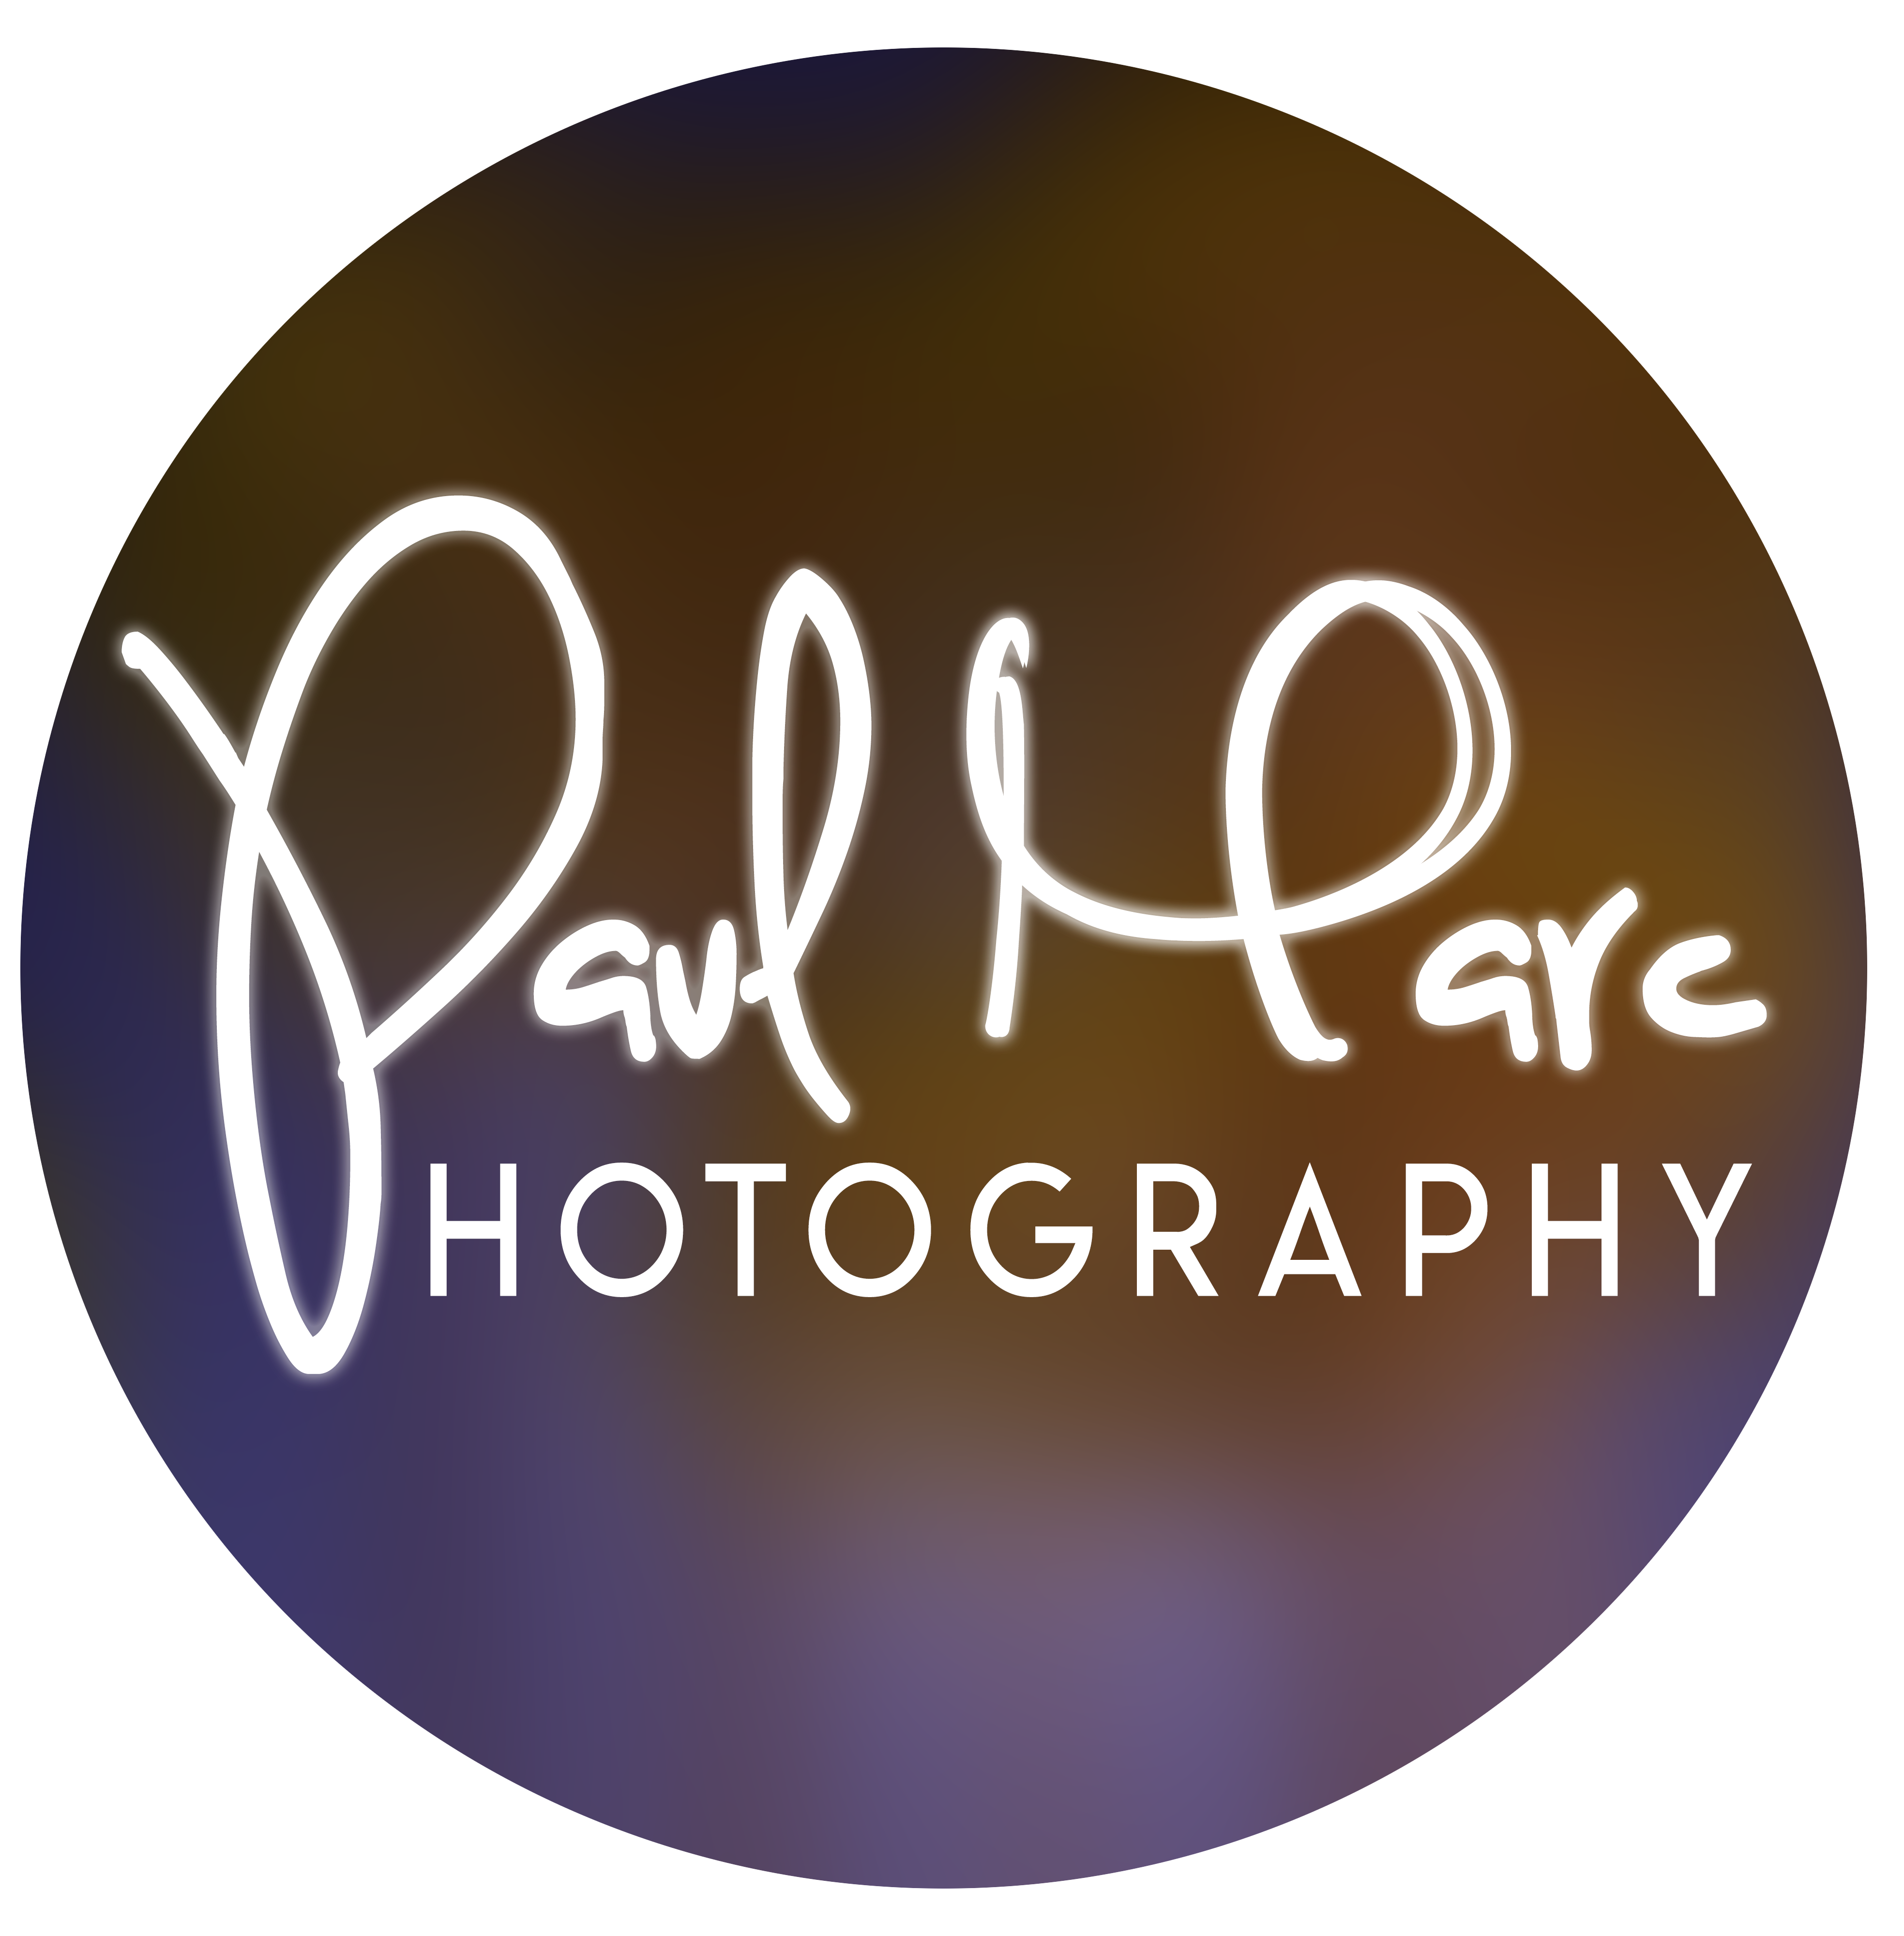 Paul-Marc Photography